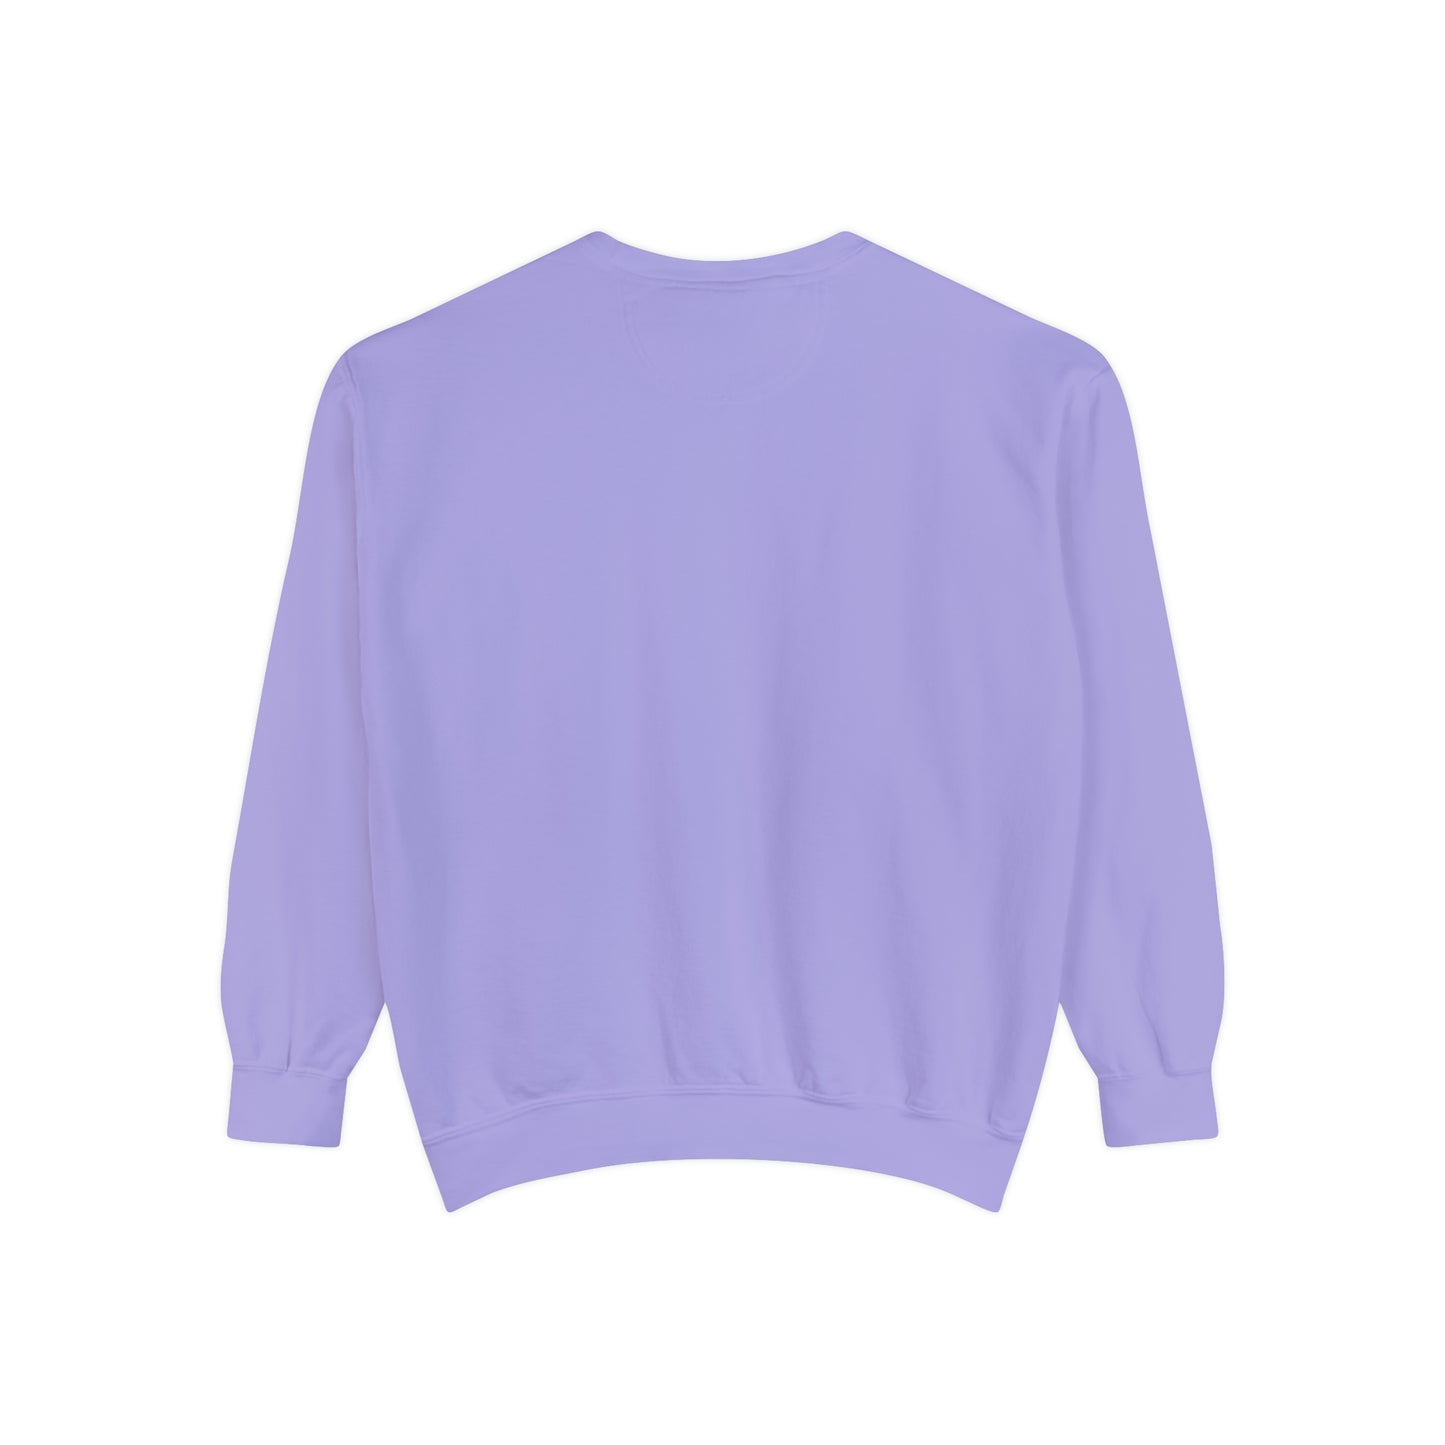 Unisex Comfort Colors Crewneck Sweatshirt | CSHL Logo